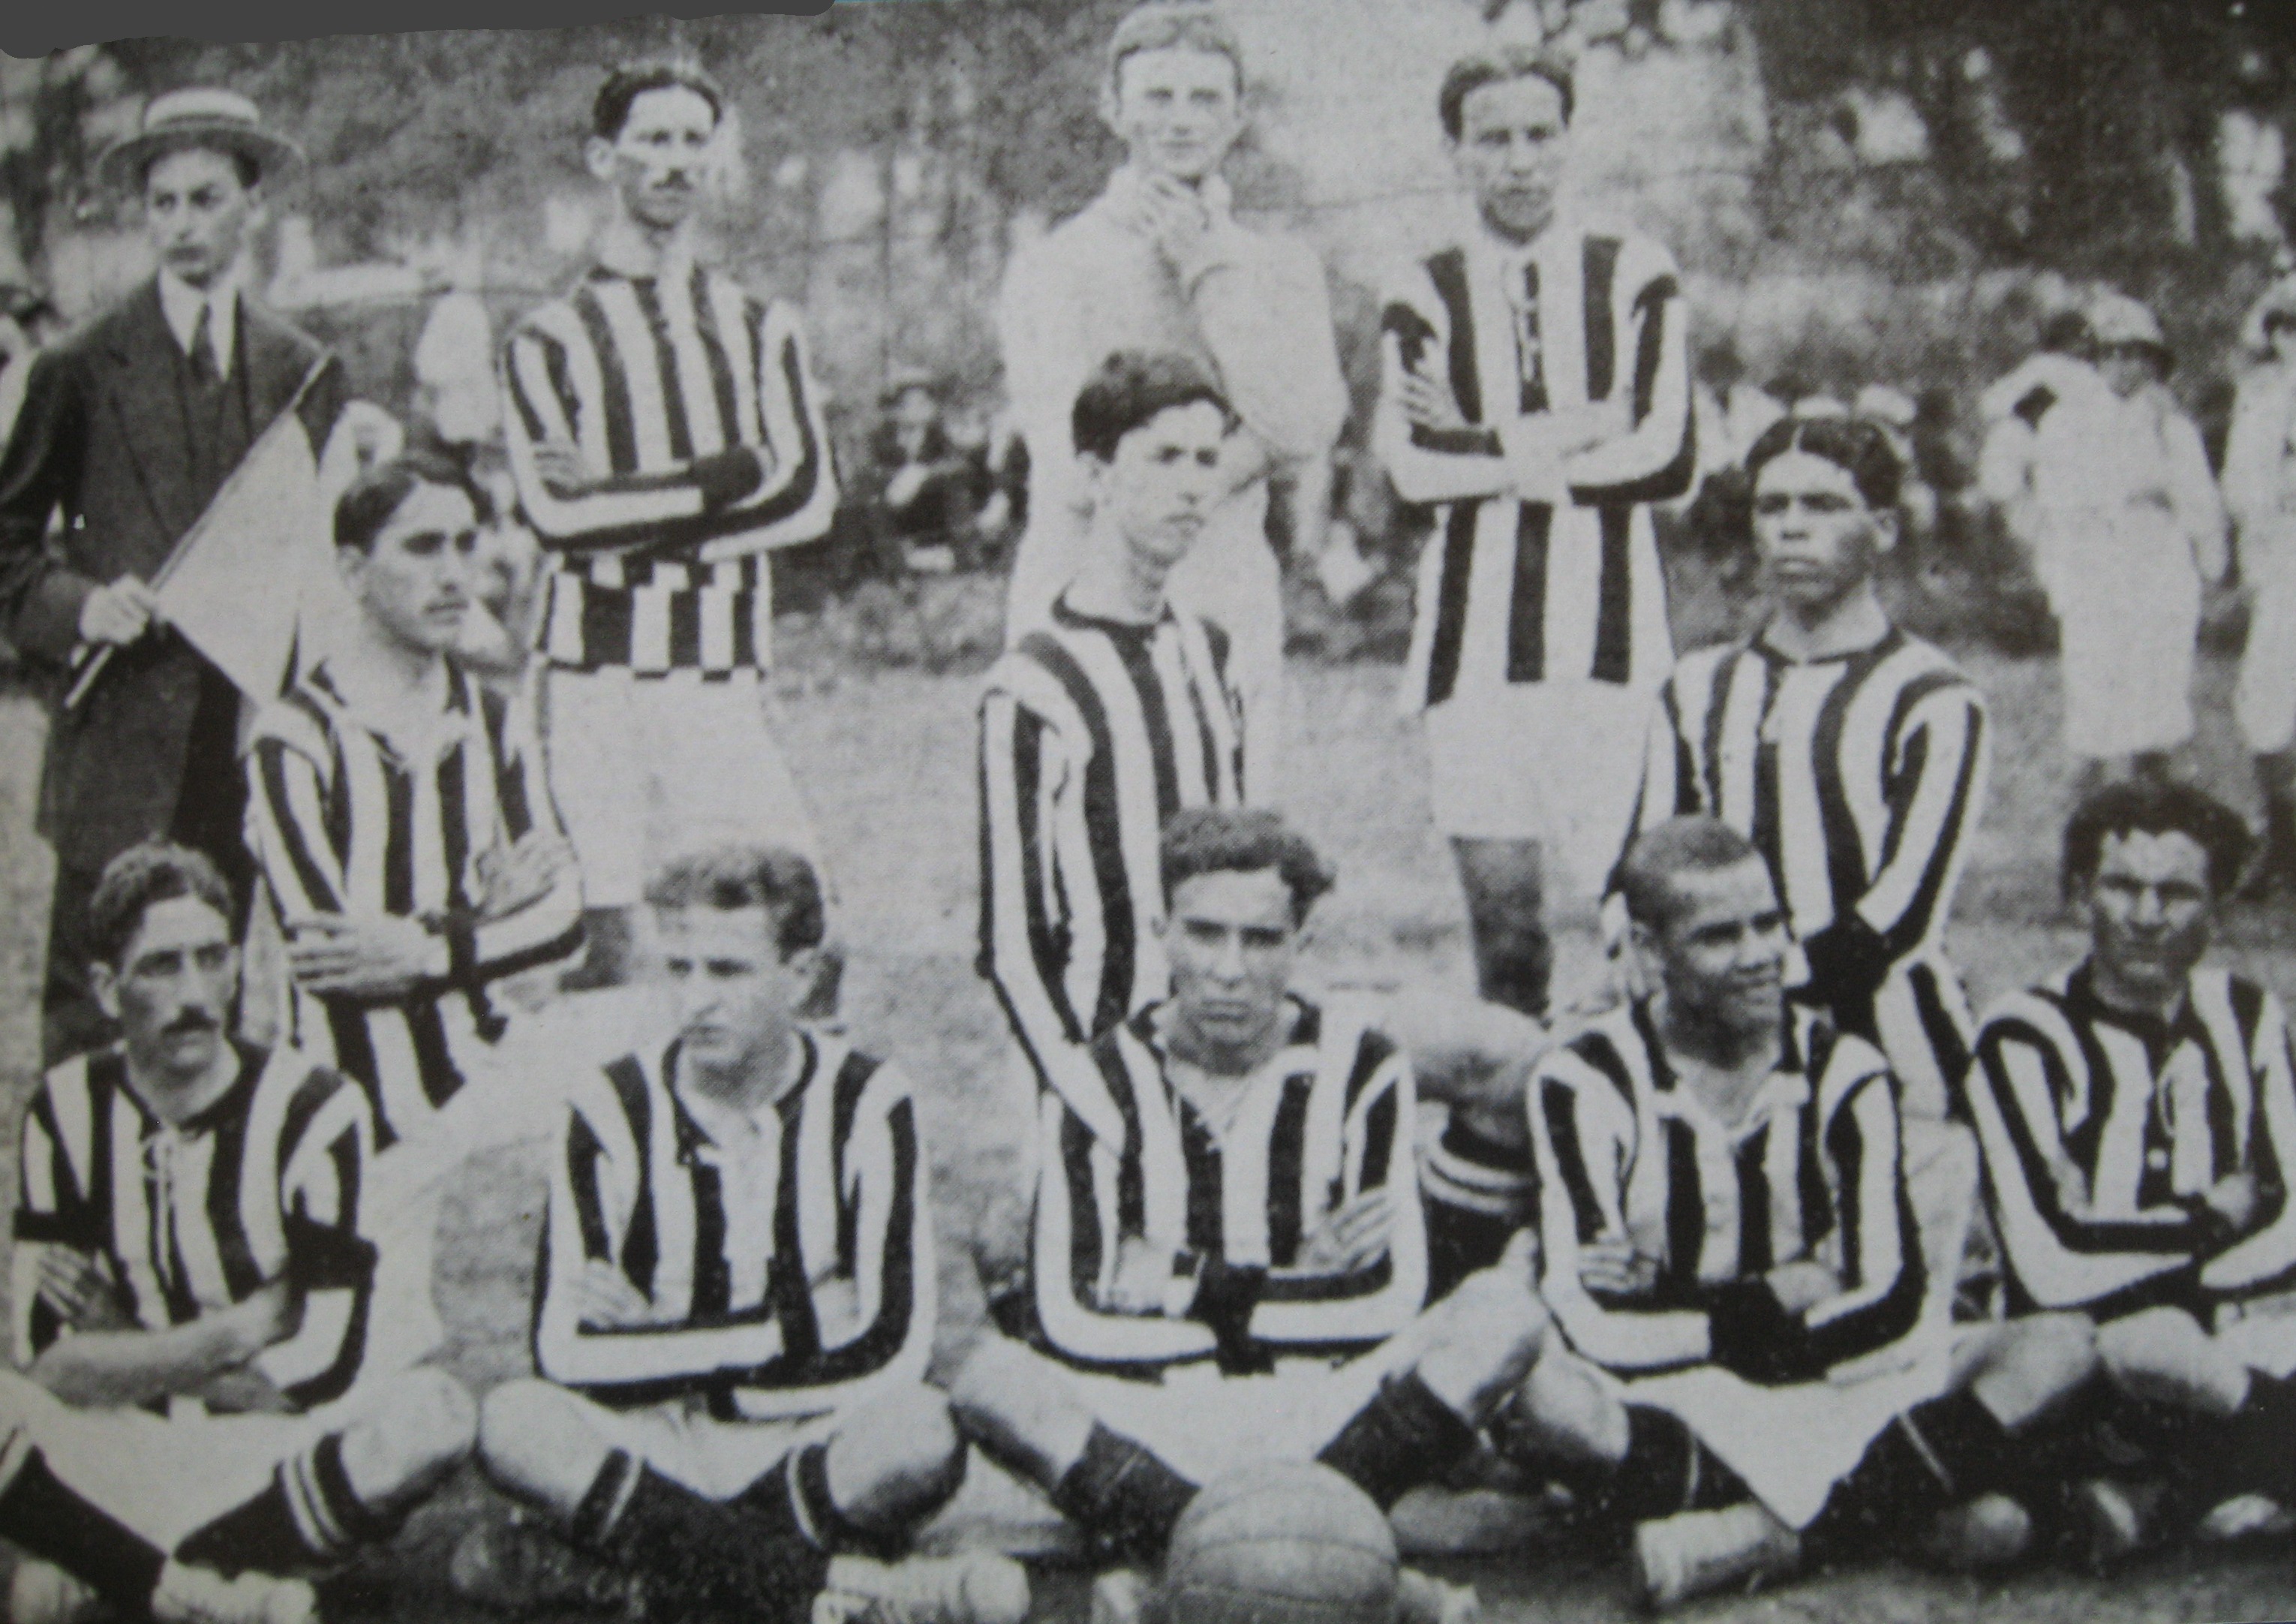 Feminino sub-17 Archives - Santos Futebol Clube